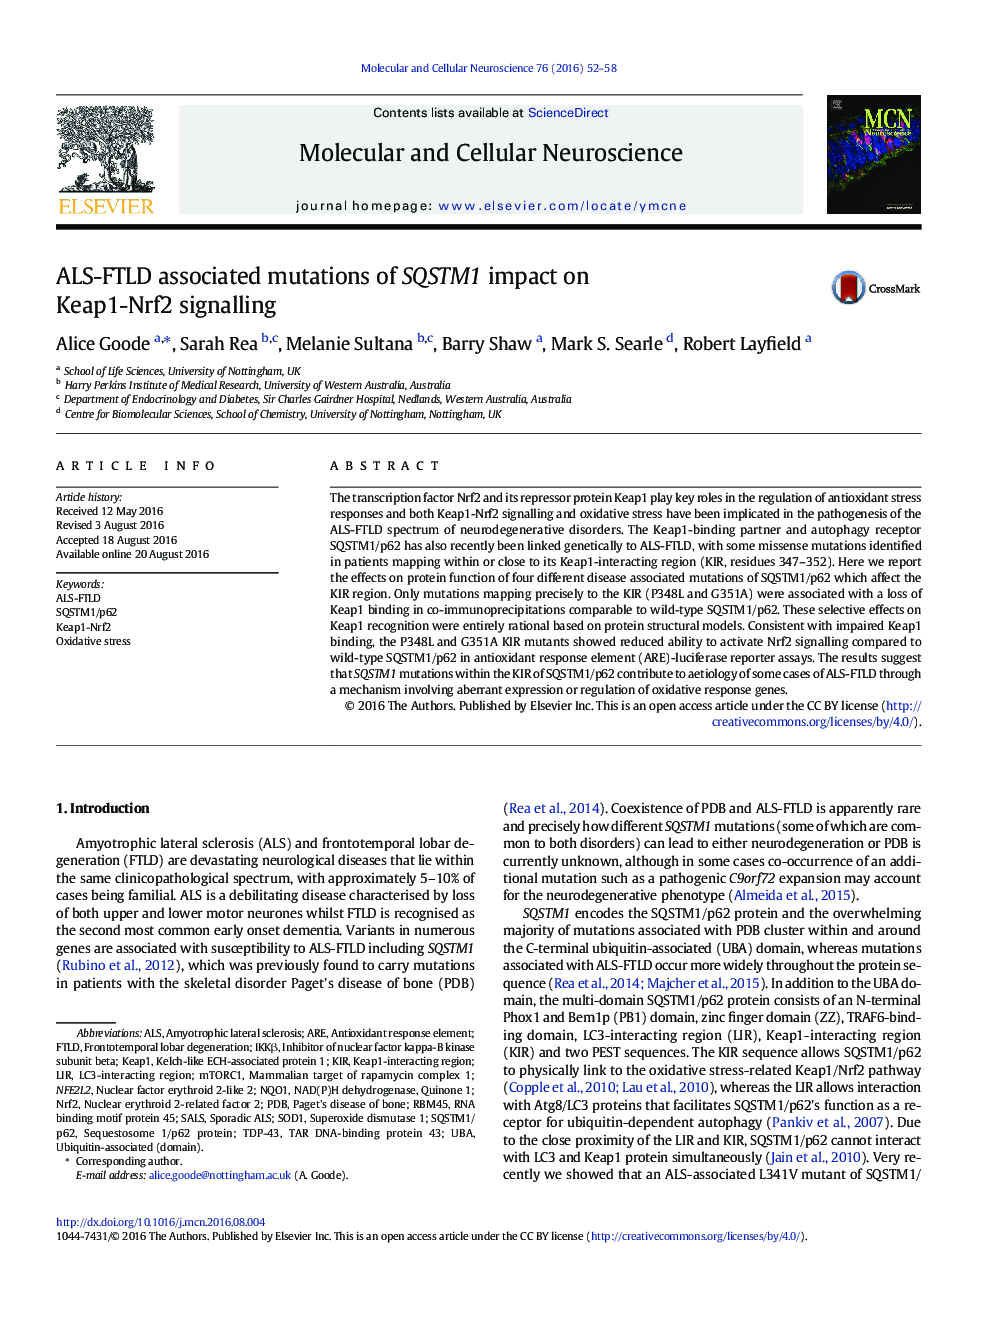 ALS-FTLD associated mutations of SQSTM1 impact on Keap1-Nrf2 signalling